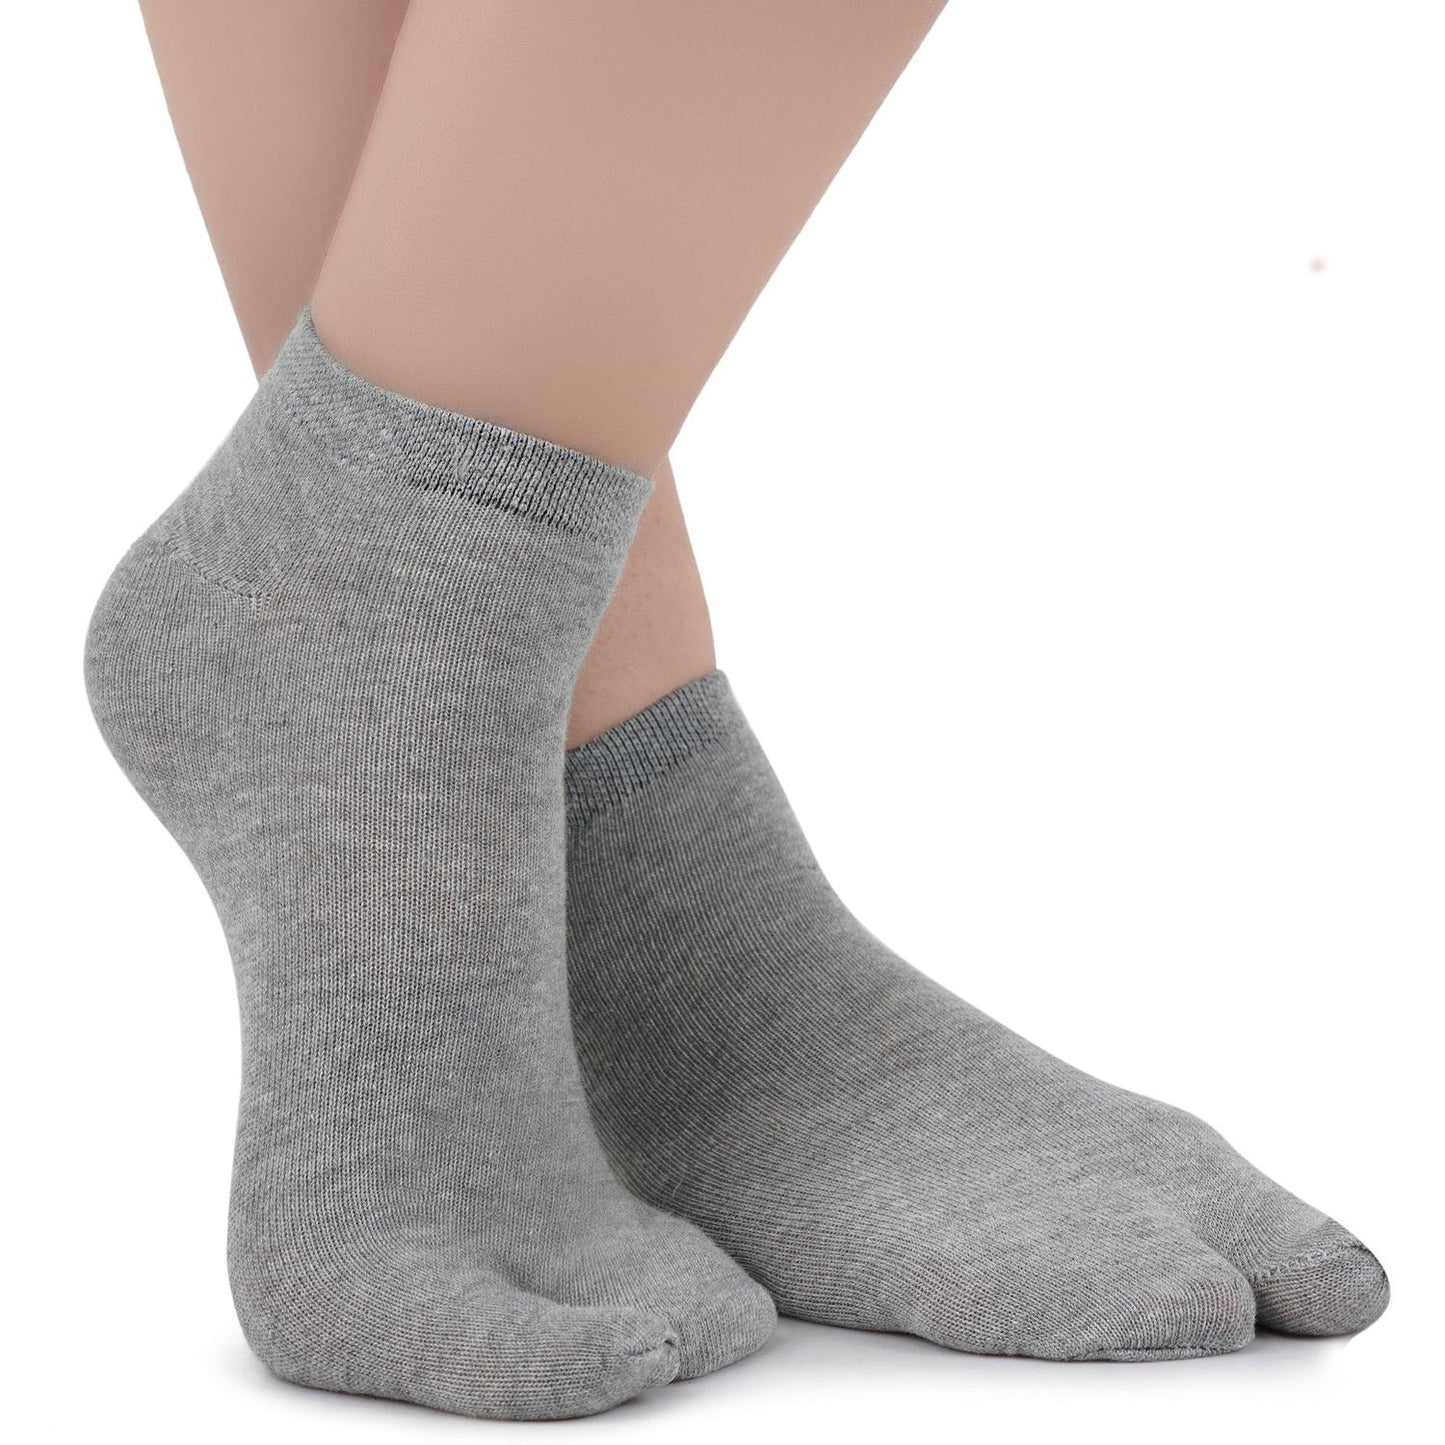 Low Ankle Length Thumb Socks - Light Grey